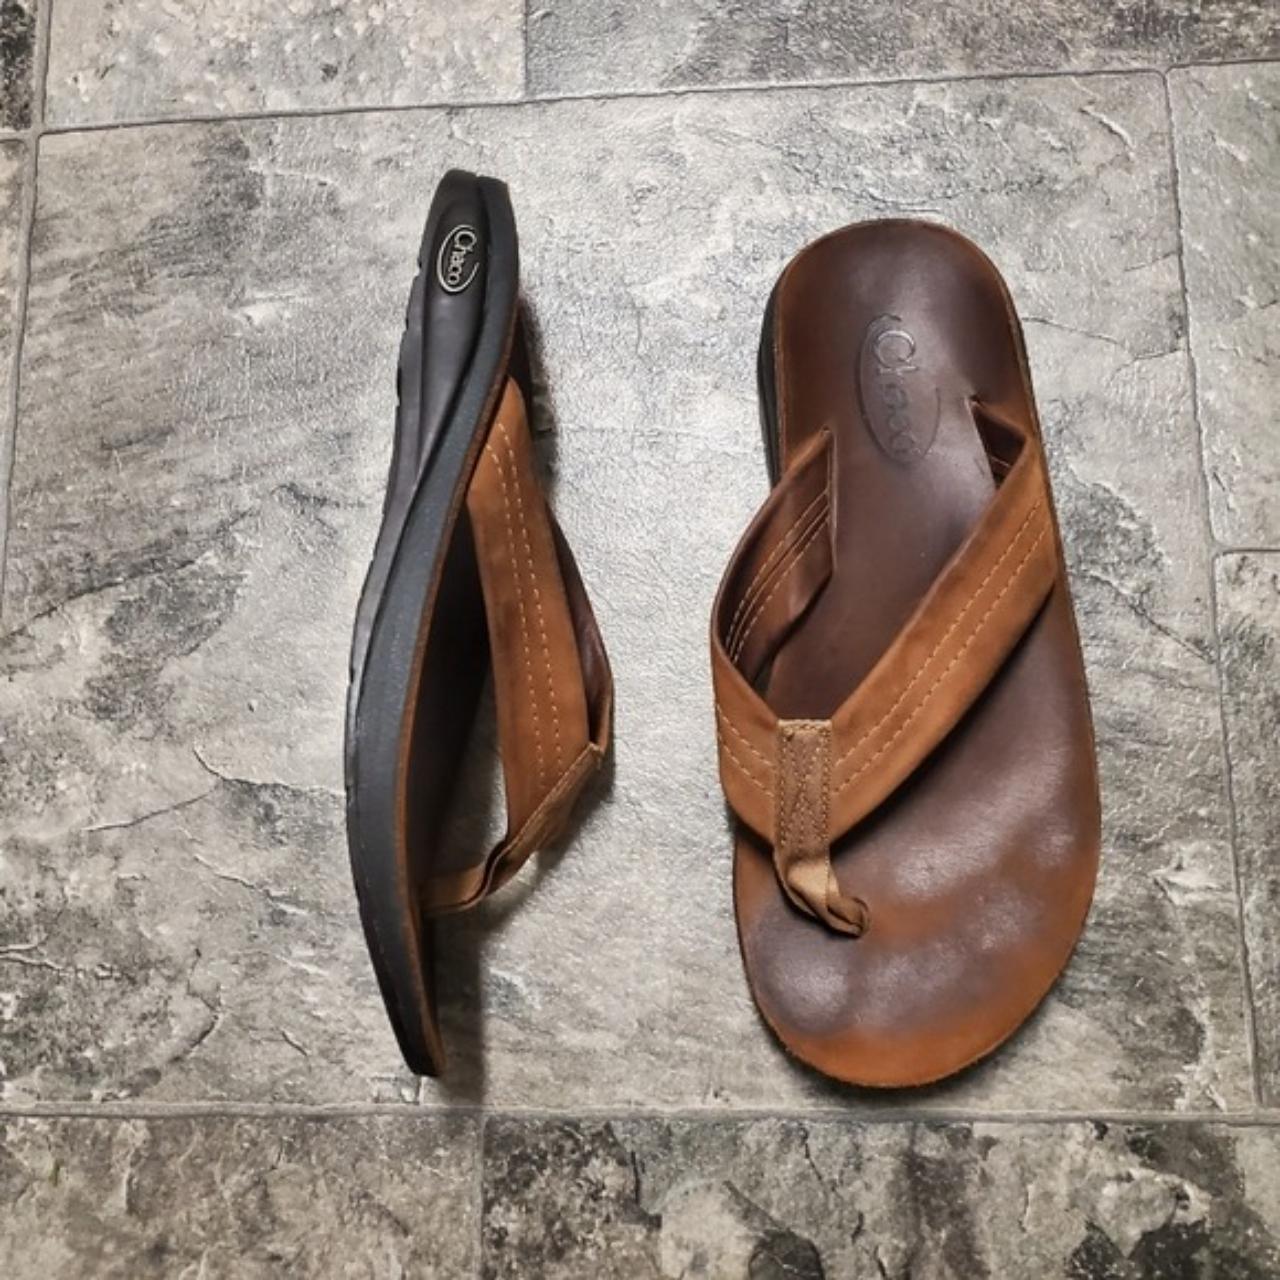 Chaco Men's Classic Leather Flip Flops US 14 M Tan Thongs Sandals